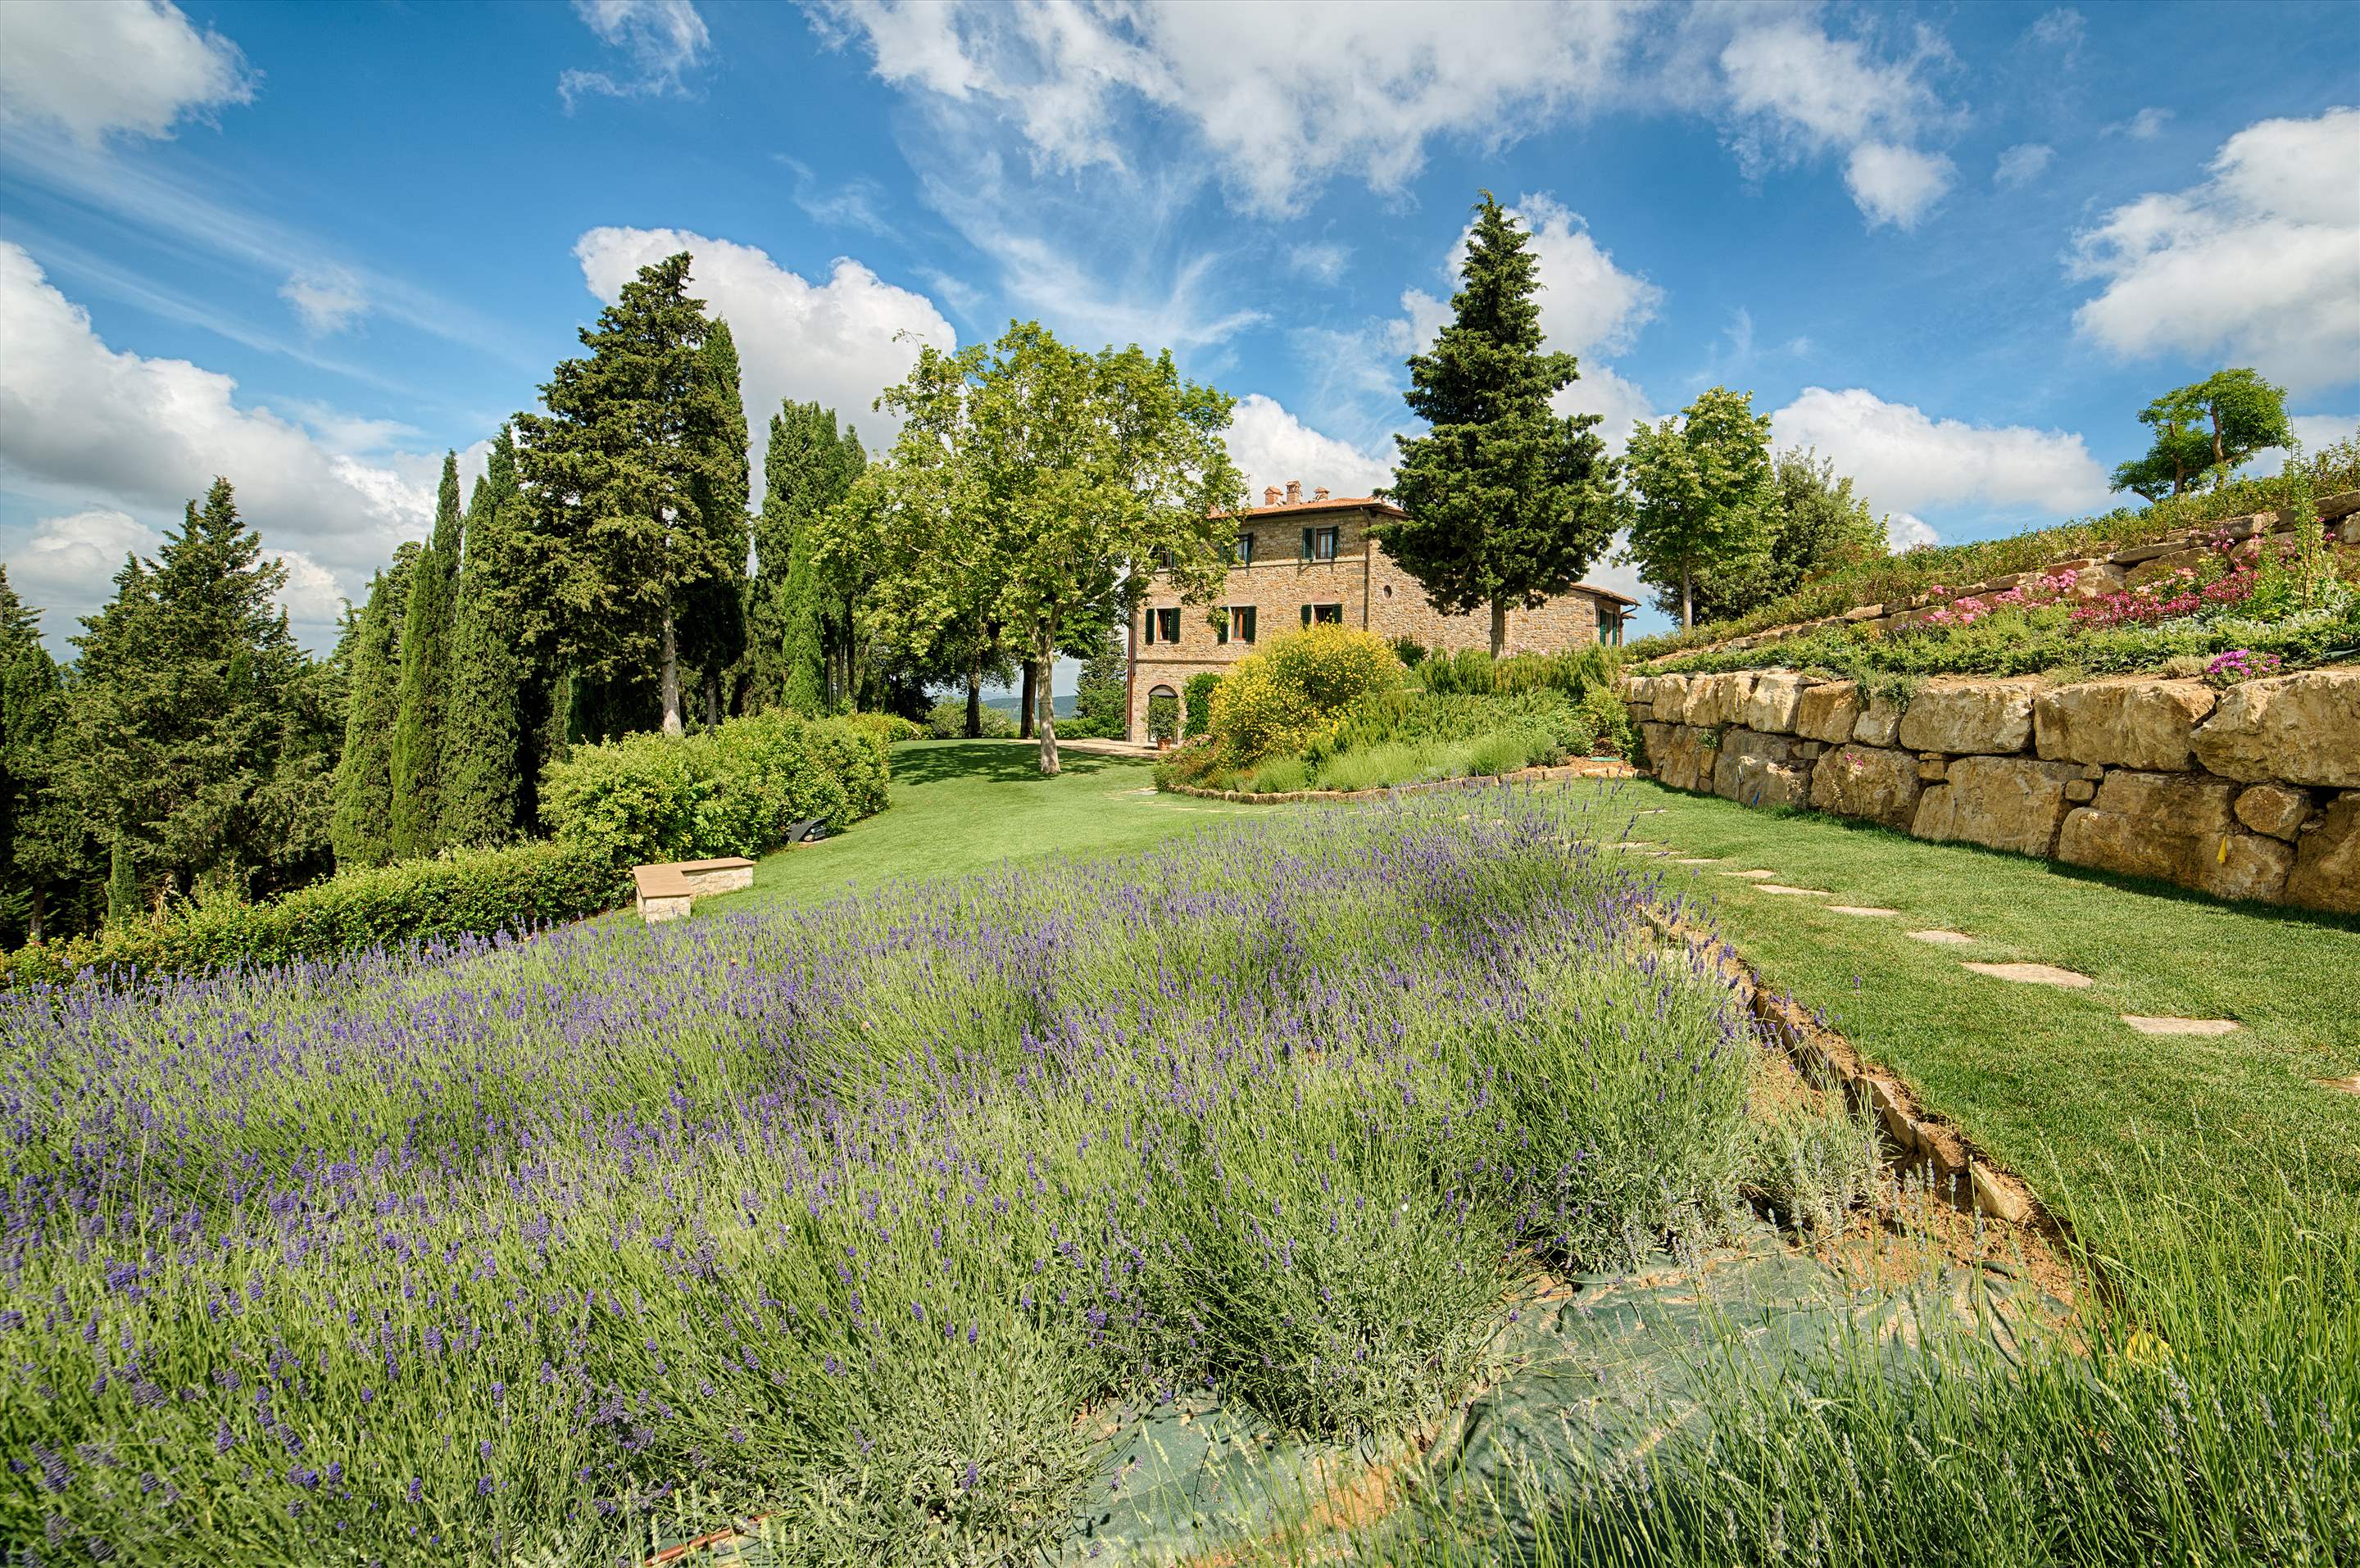 Villa La Valetta, Apt Uva + 1 Bedroom, 2 bedroom villa in Chianti & Countryside, Tuscany Photo #2